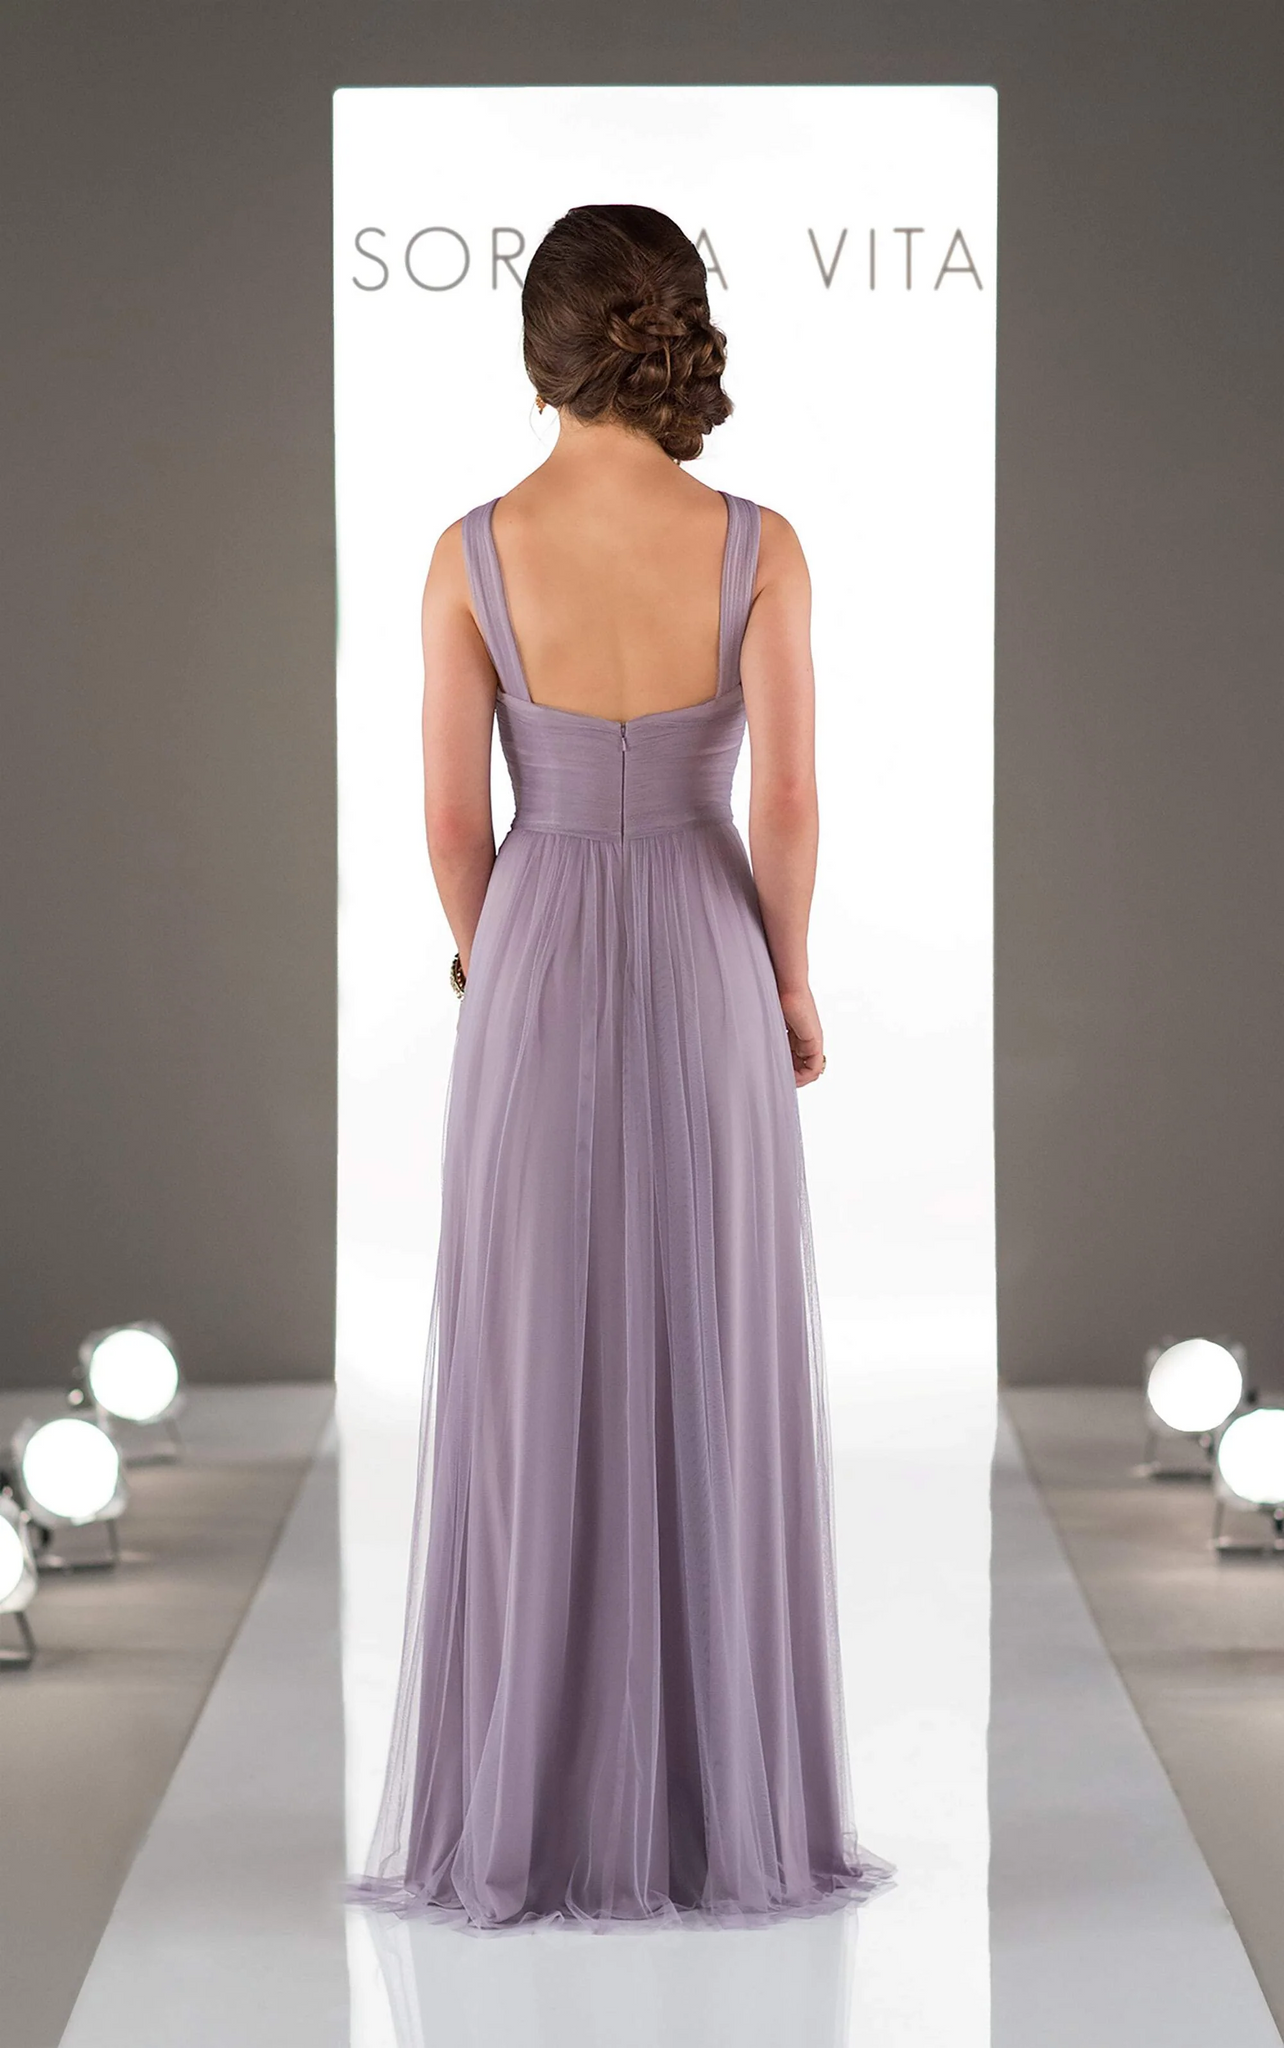 Sorella Vita Dress Style 8828 (Thistle-Size 12) Prom, Ball., Black-tie, Bridesmaid, Pageant